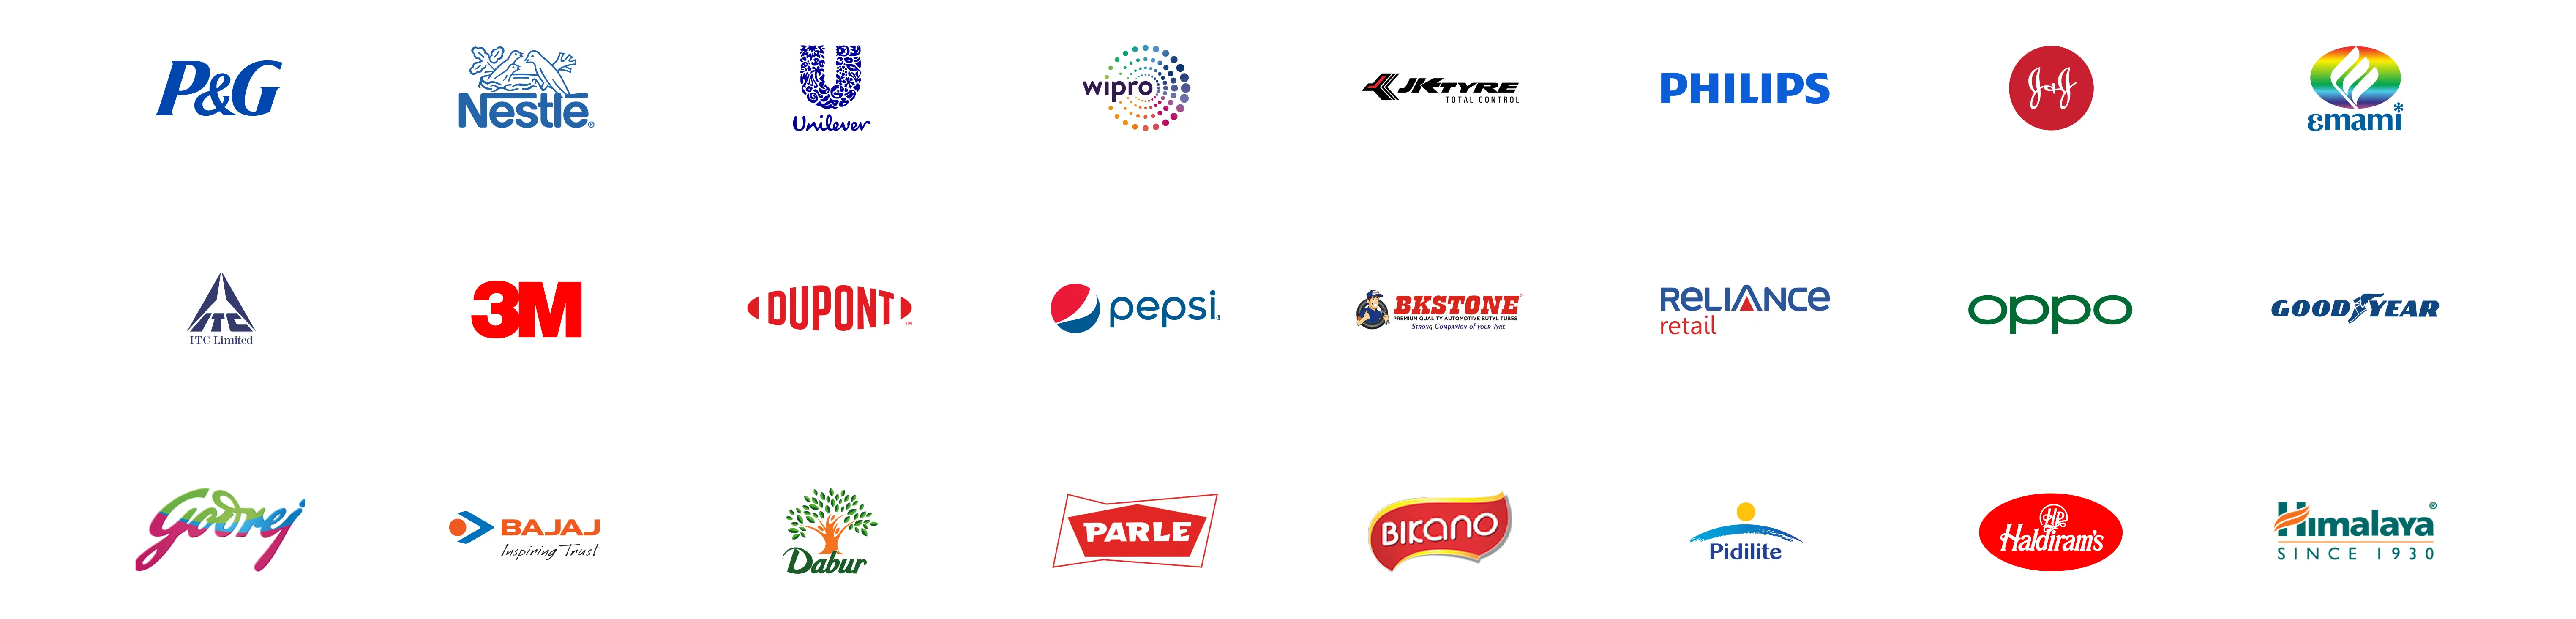 distributo-distribution-brands